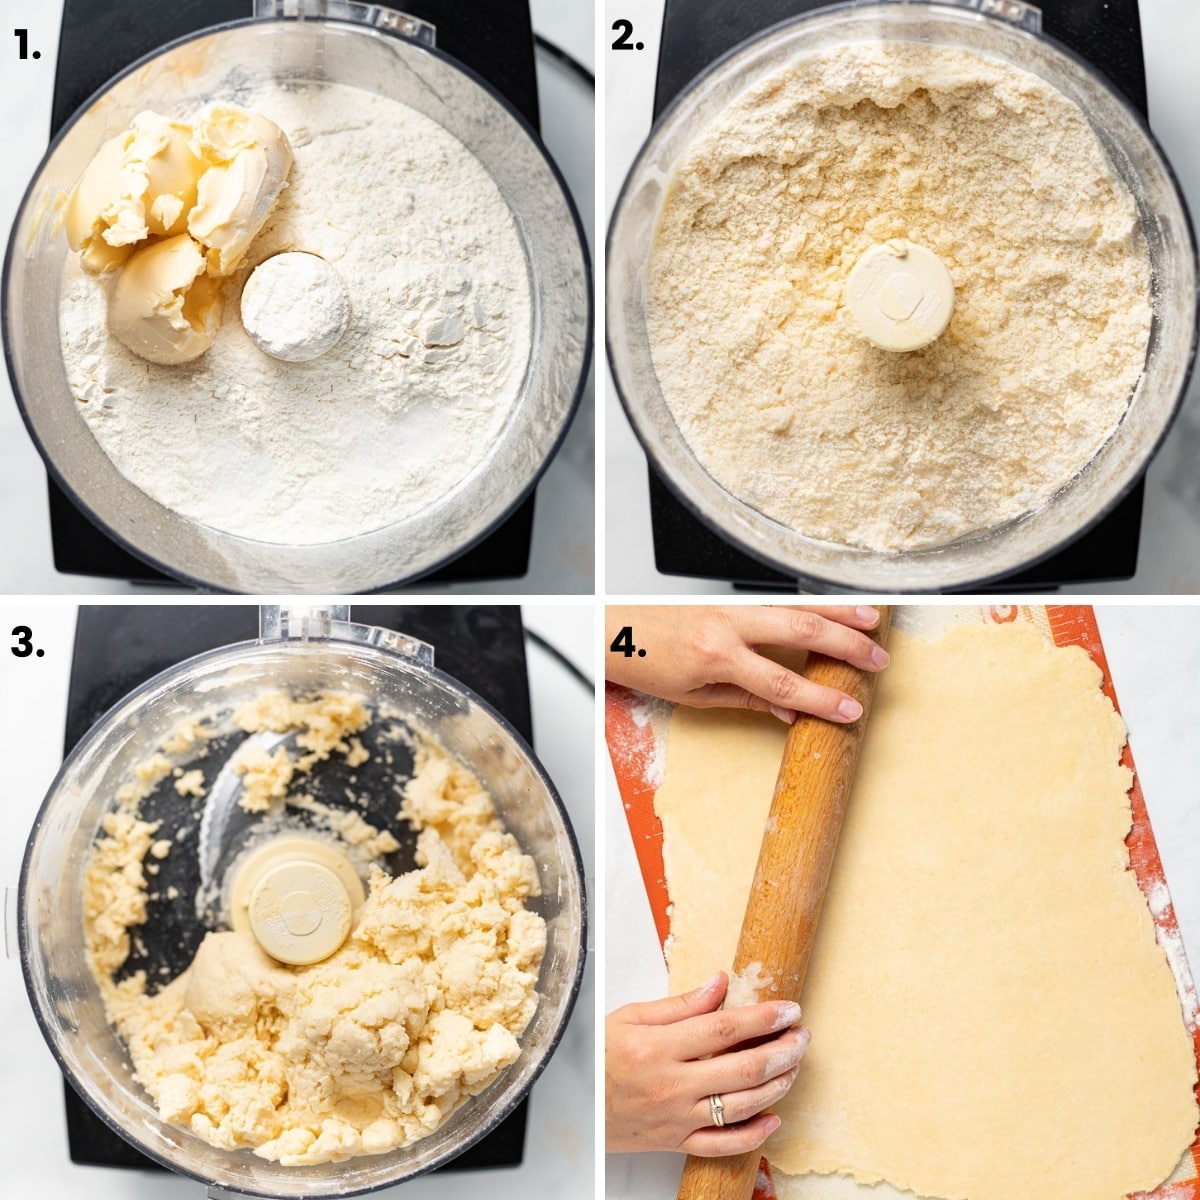 steps for making vegan pie crust as per written instructions